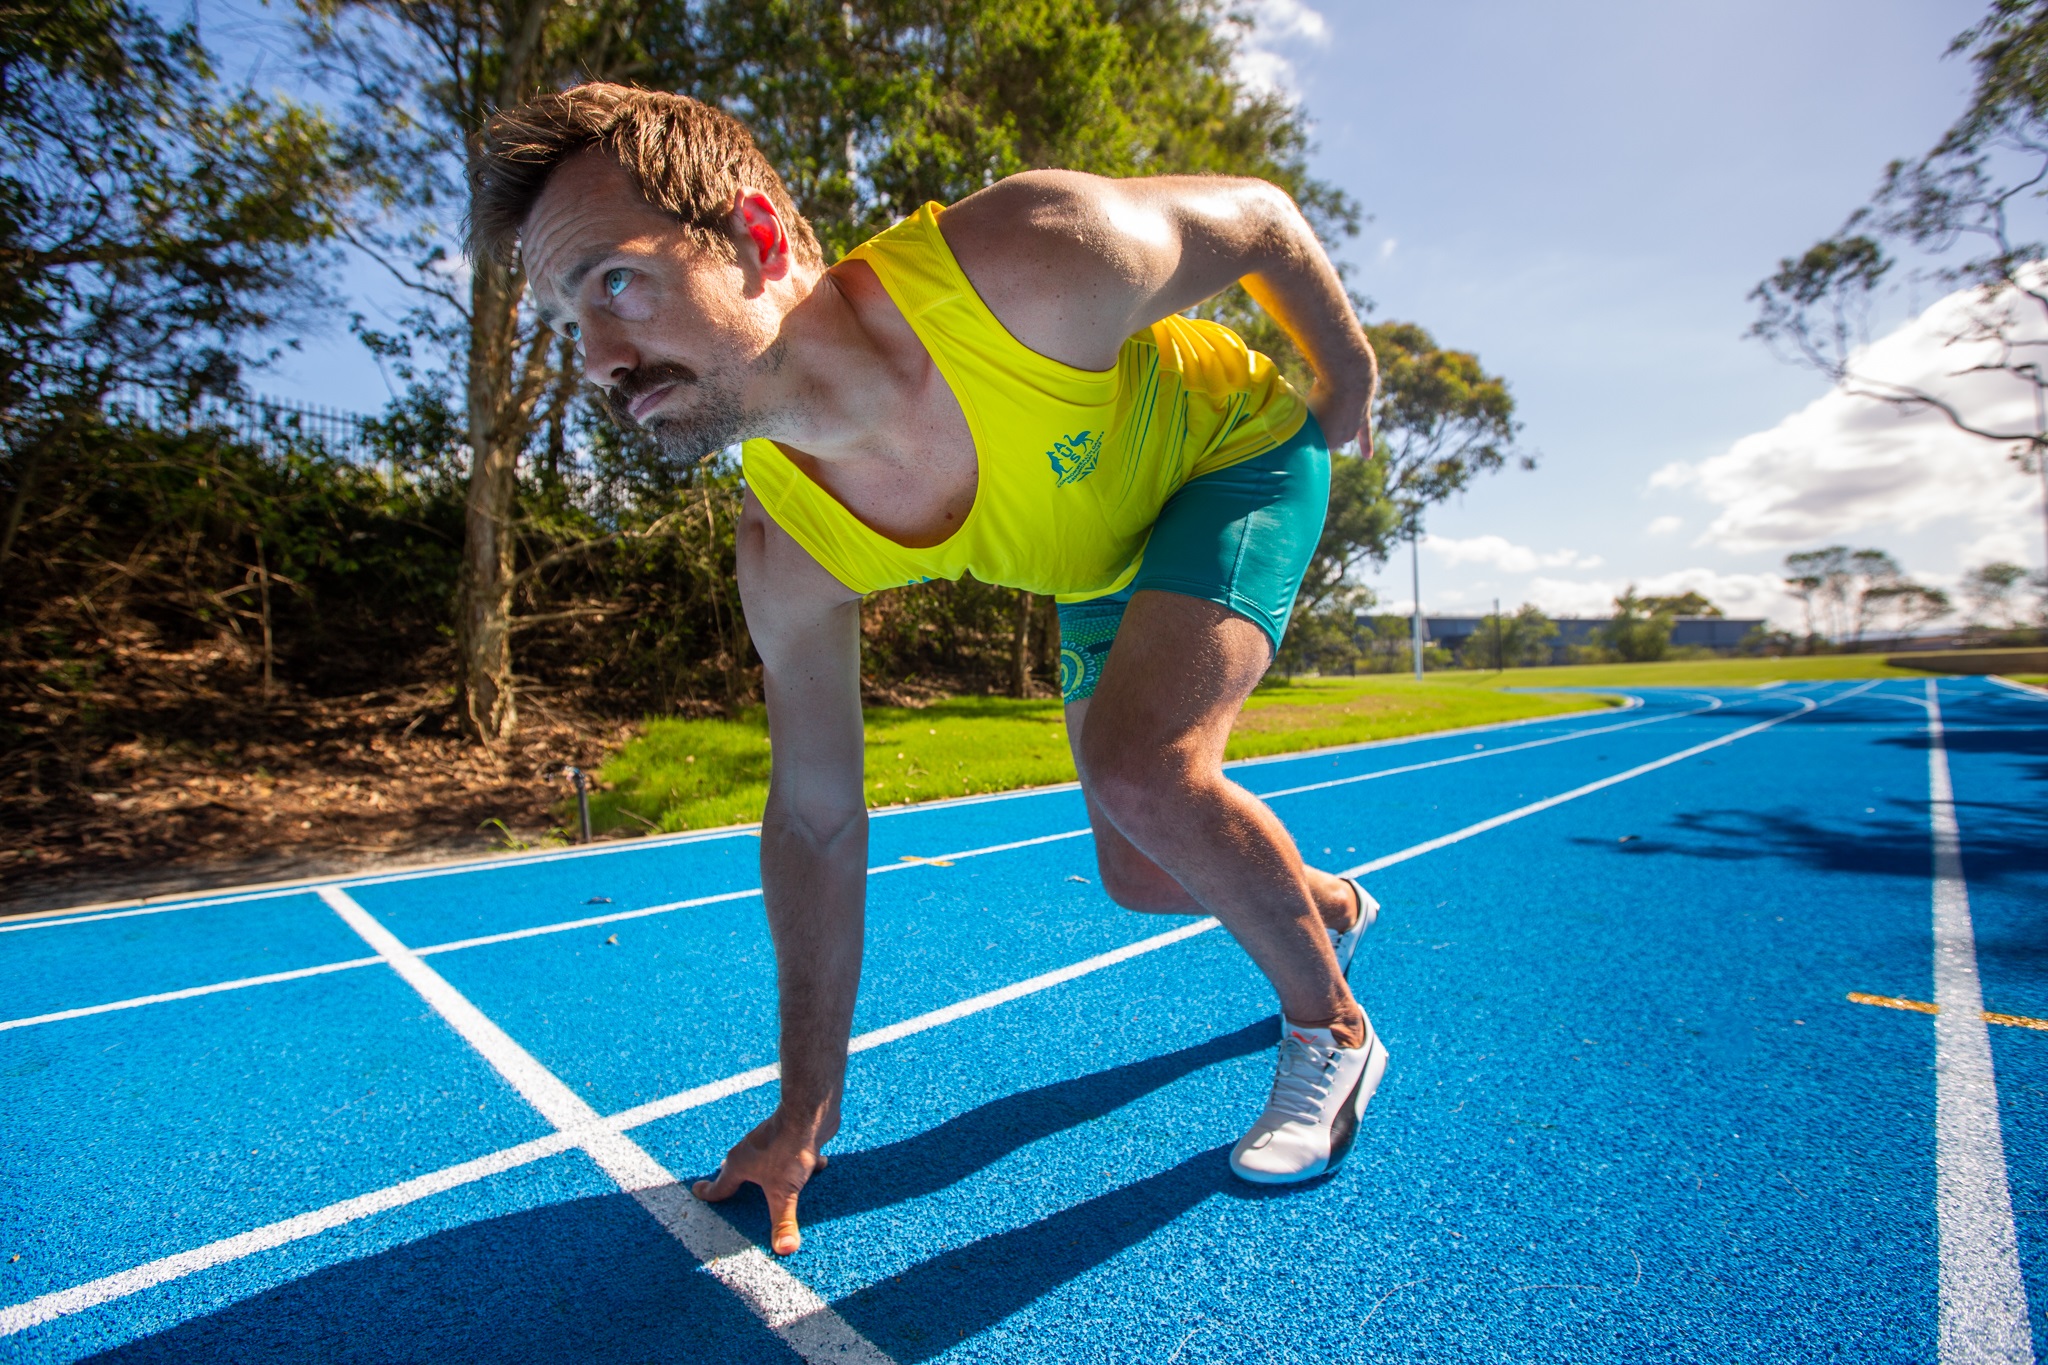 Paralympian Evan O'Hanlon practising on the new track (3).jpg